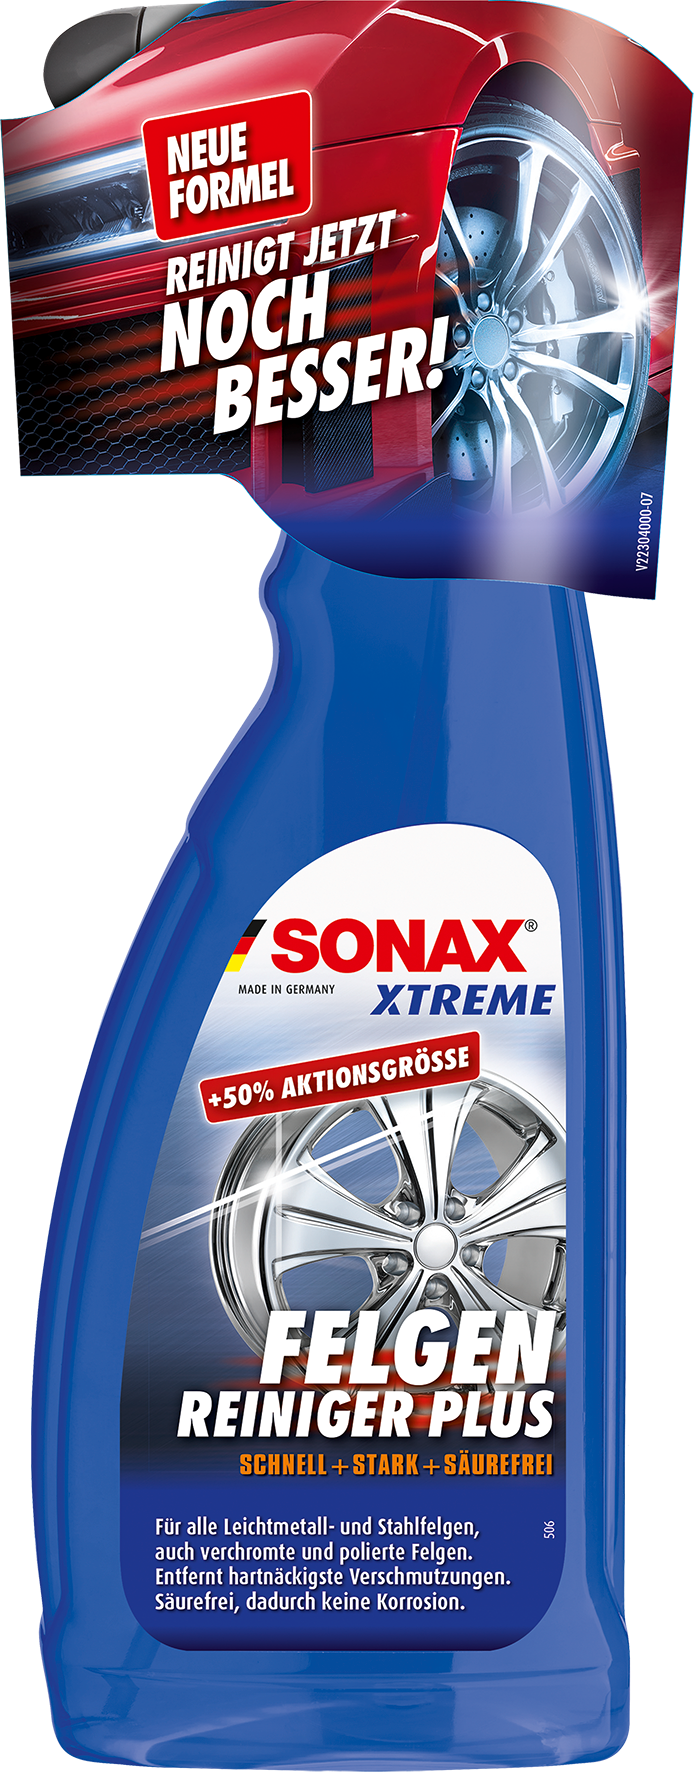 Sonax 02304000 Xtreme FelgenReiniger Plus 750ml